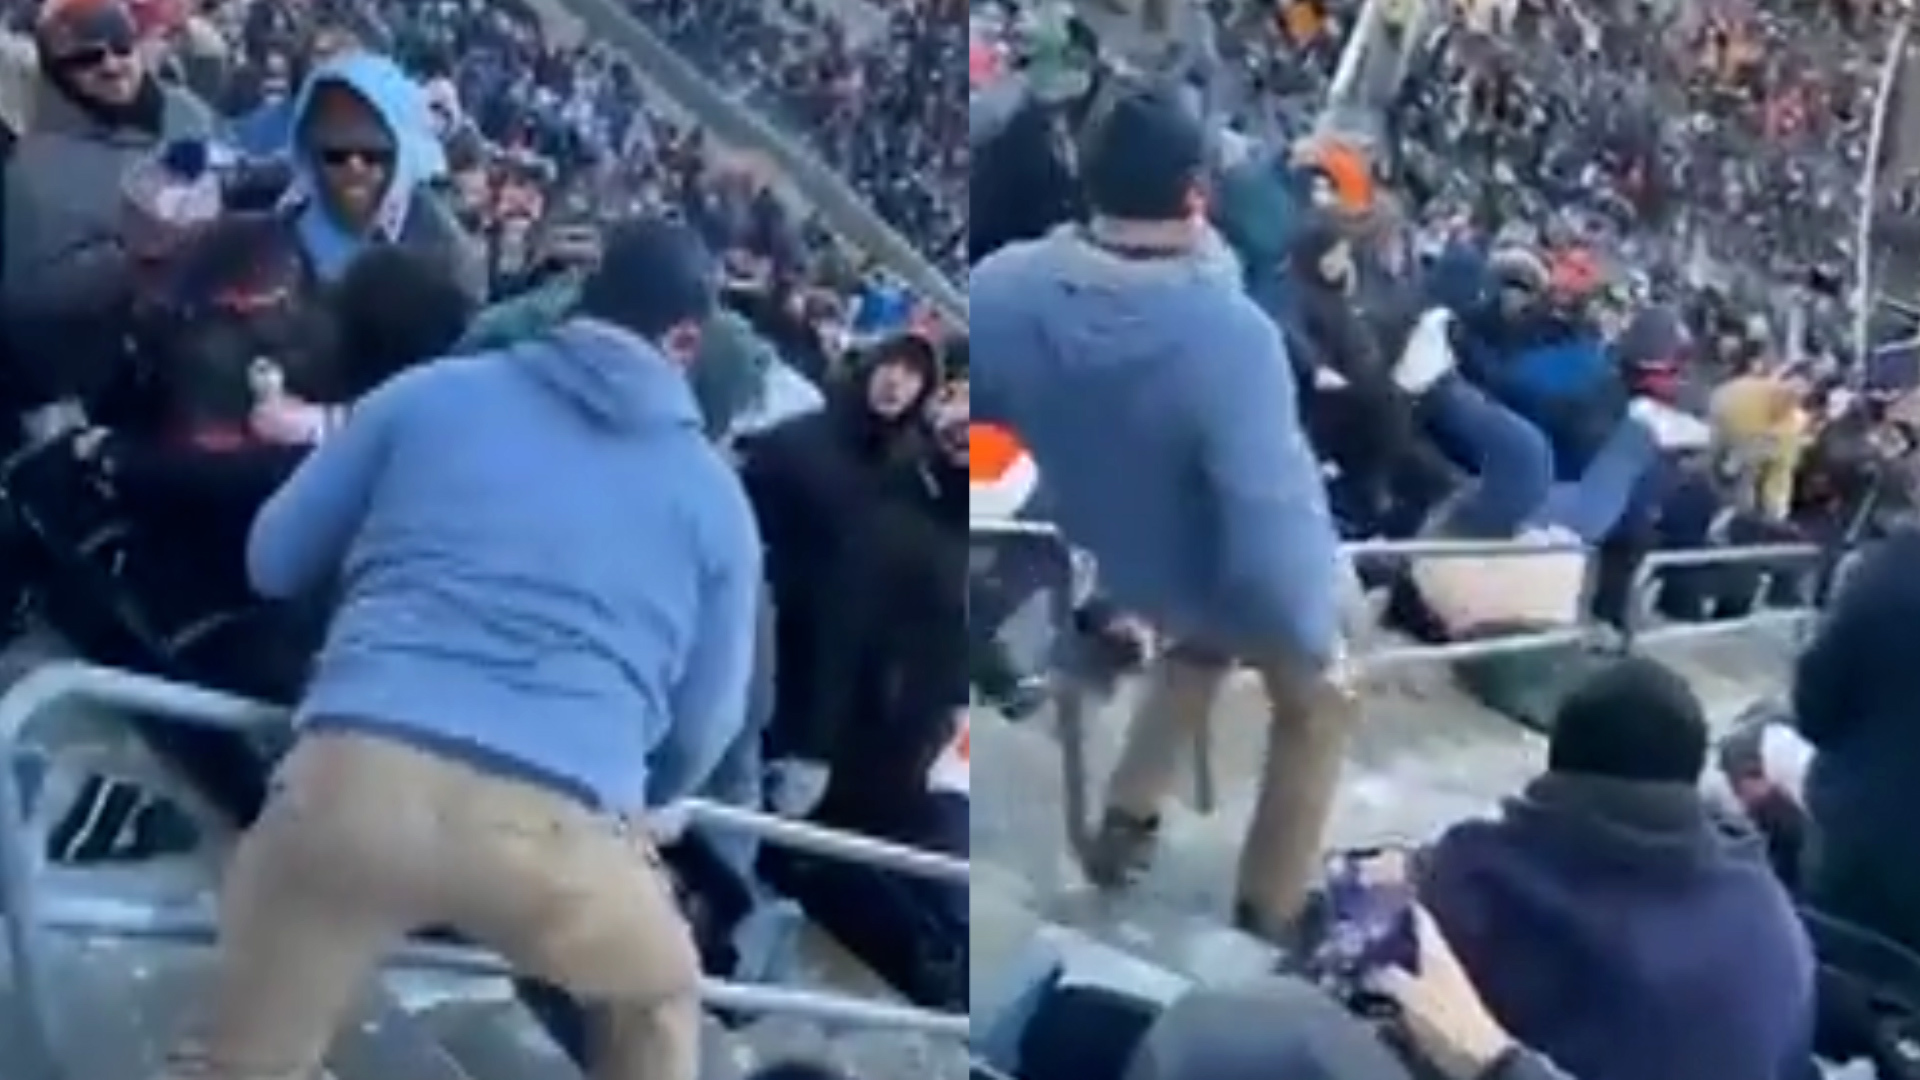 Green Bay packers fan sent dangerously tumbling down stadium stairs during brawl